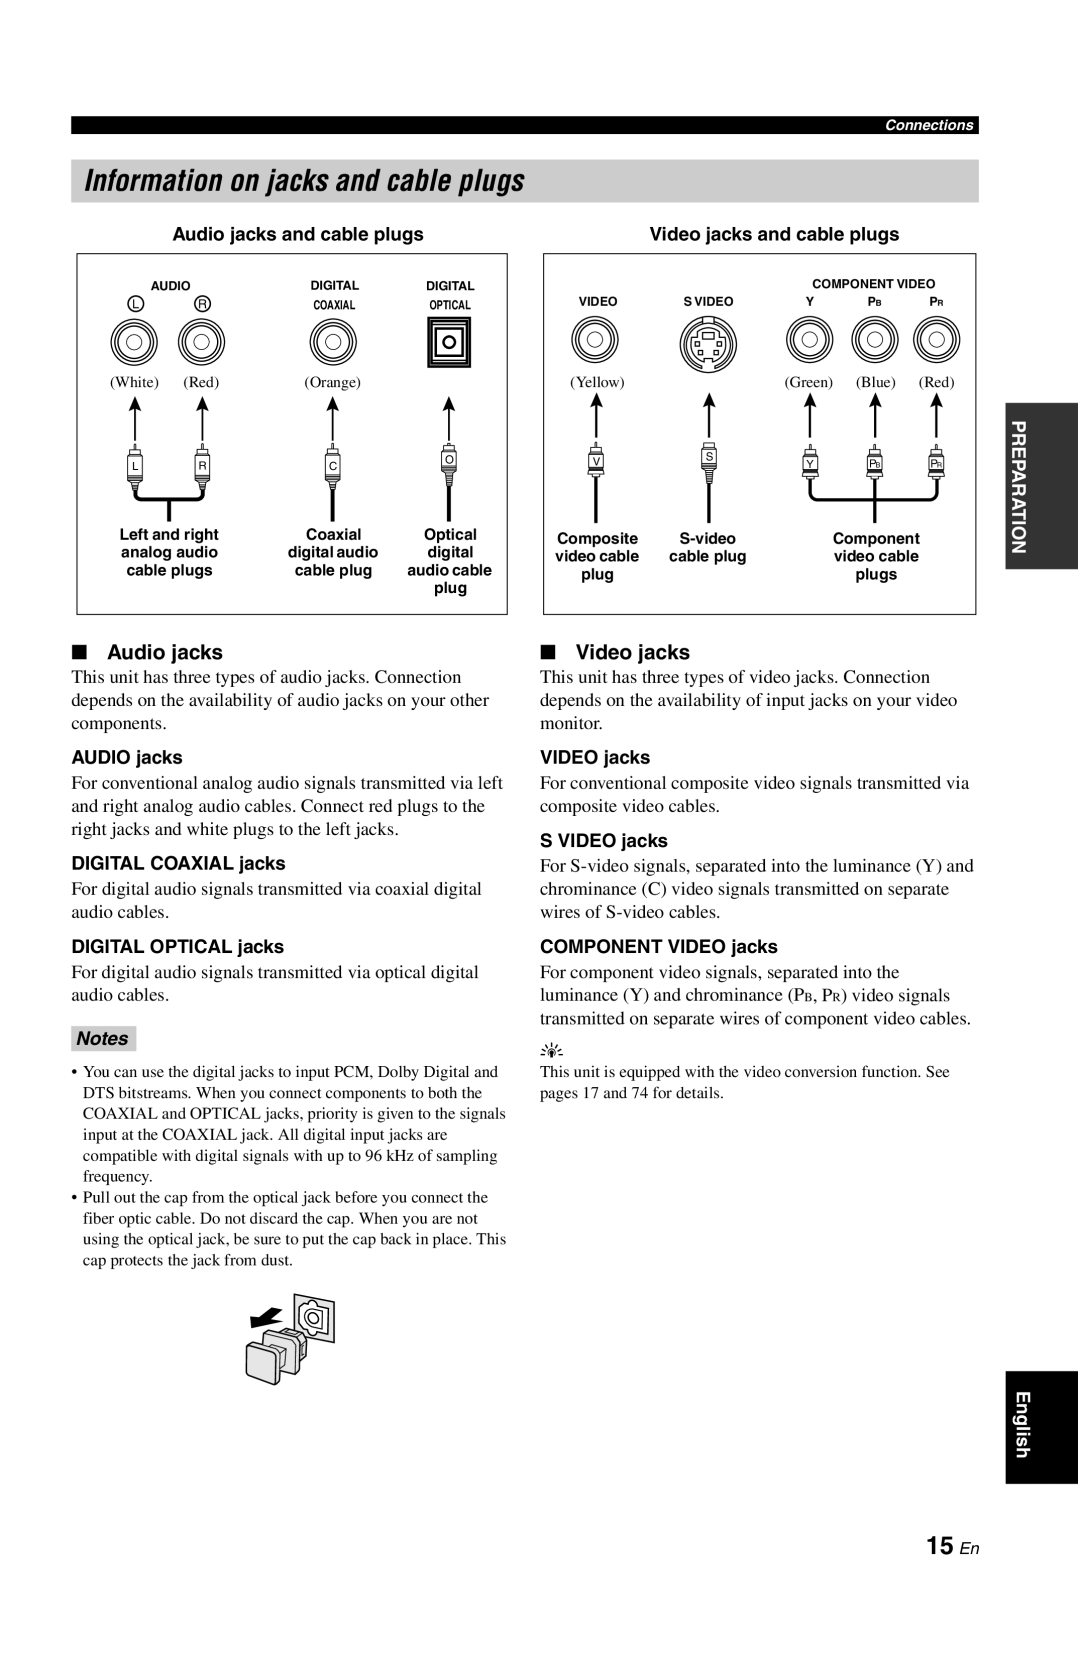 Yamaha DSP-AX861SE Information on jacks and cable plugs, 15 En, Video jacks, Audio jacks and cable plugs, AUDIO jacks 